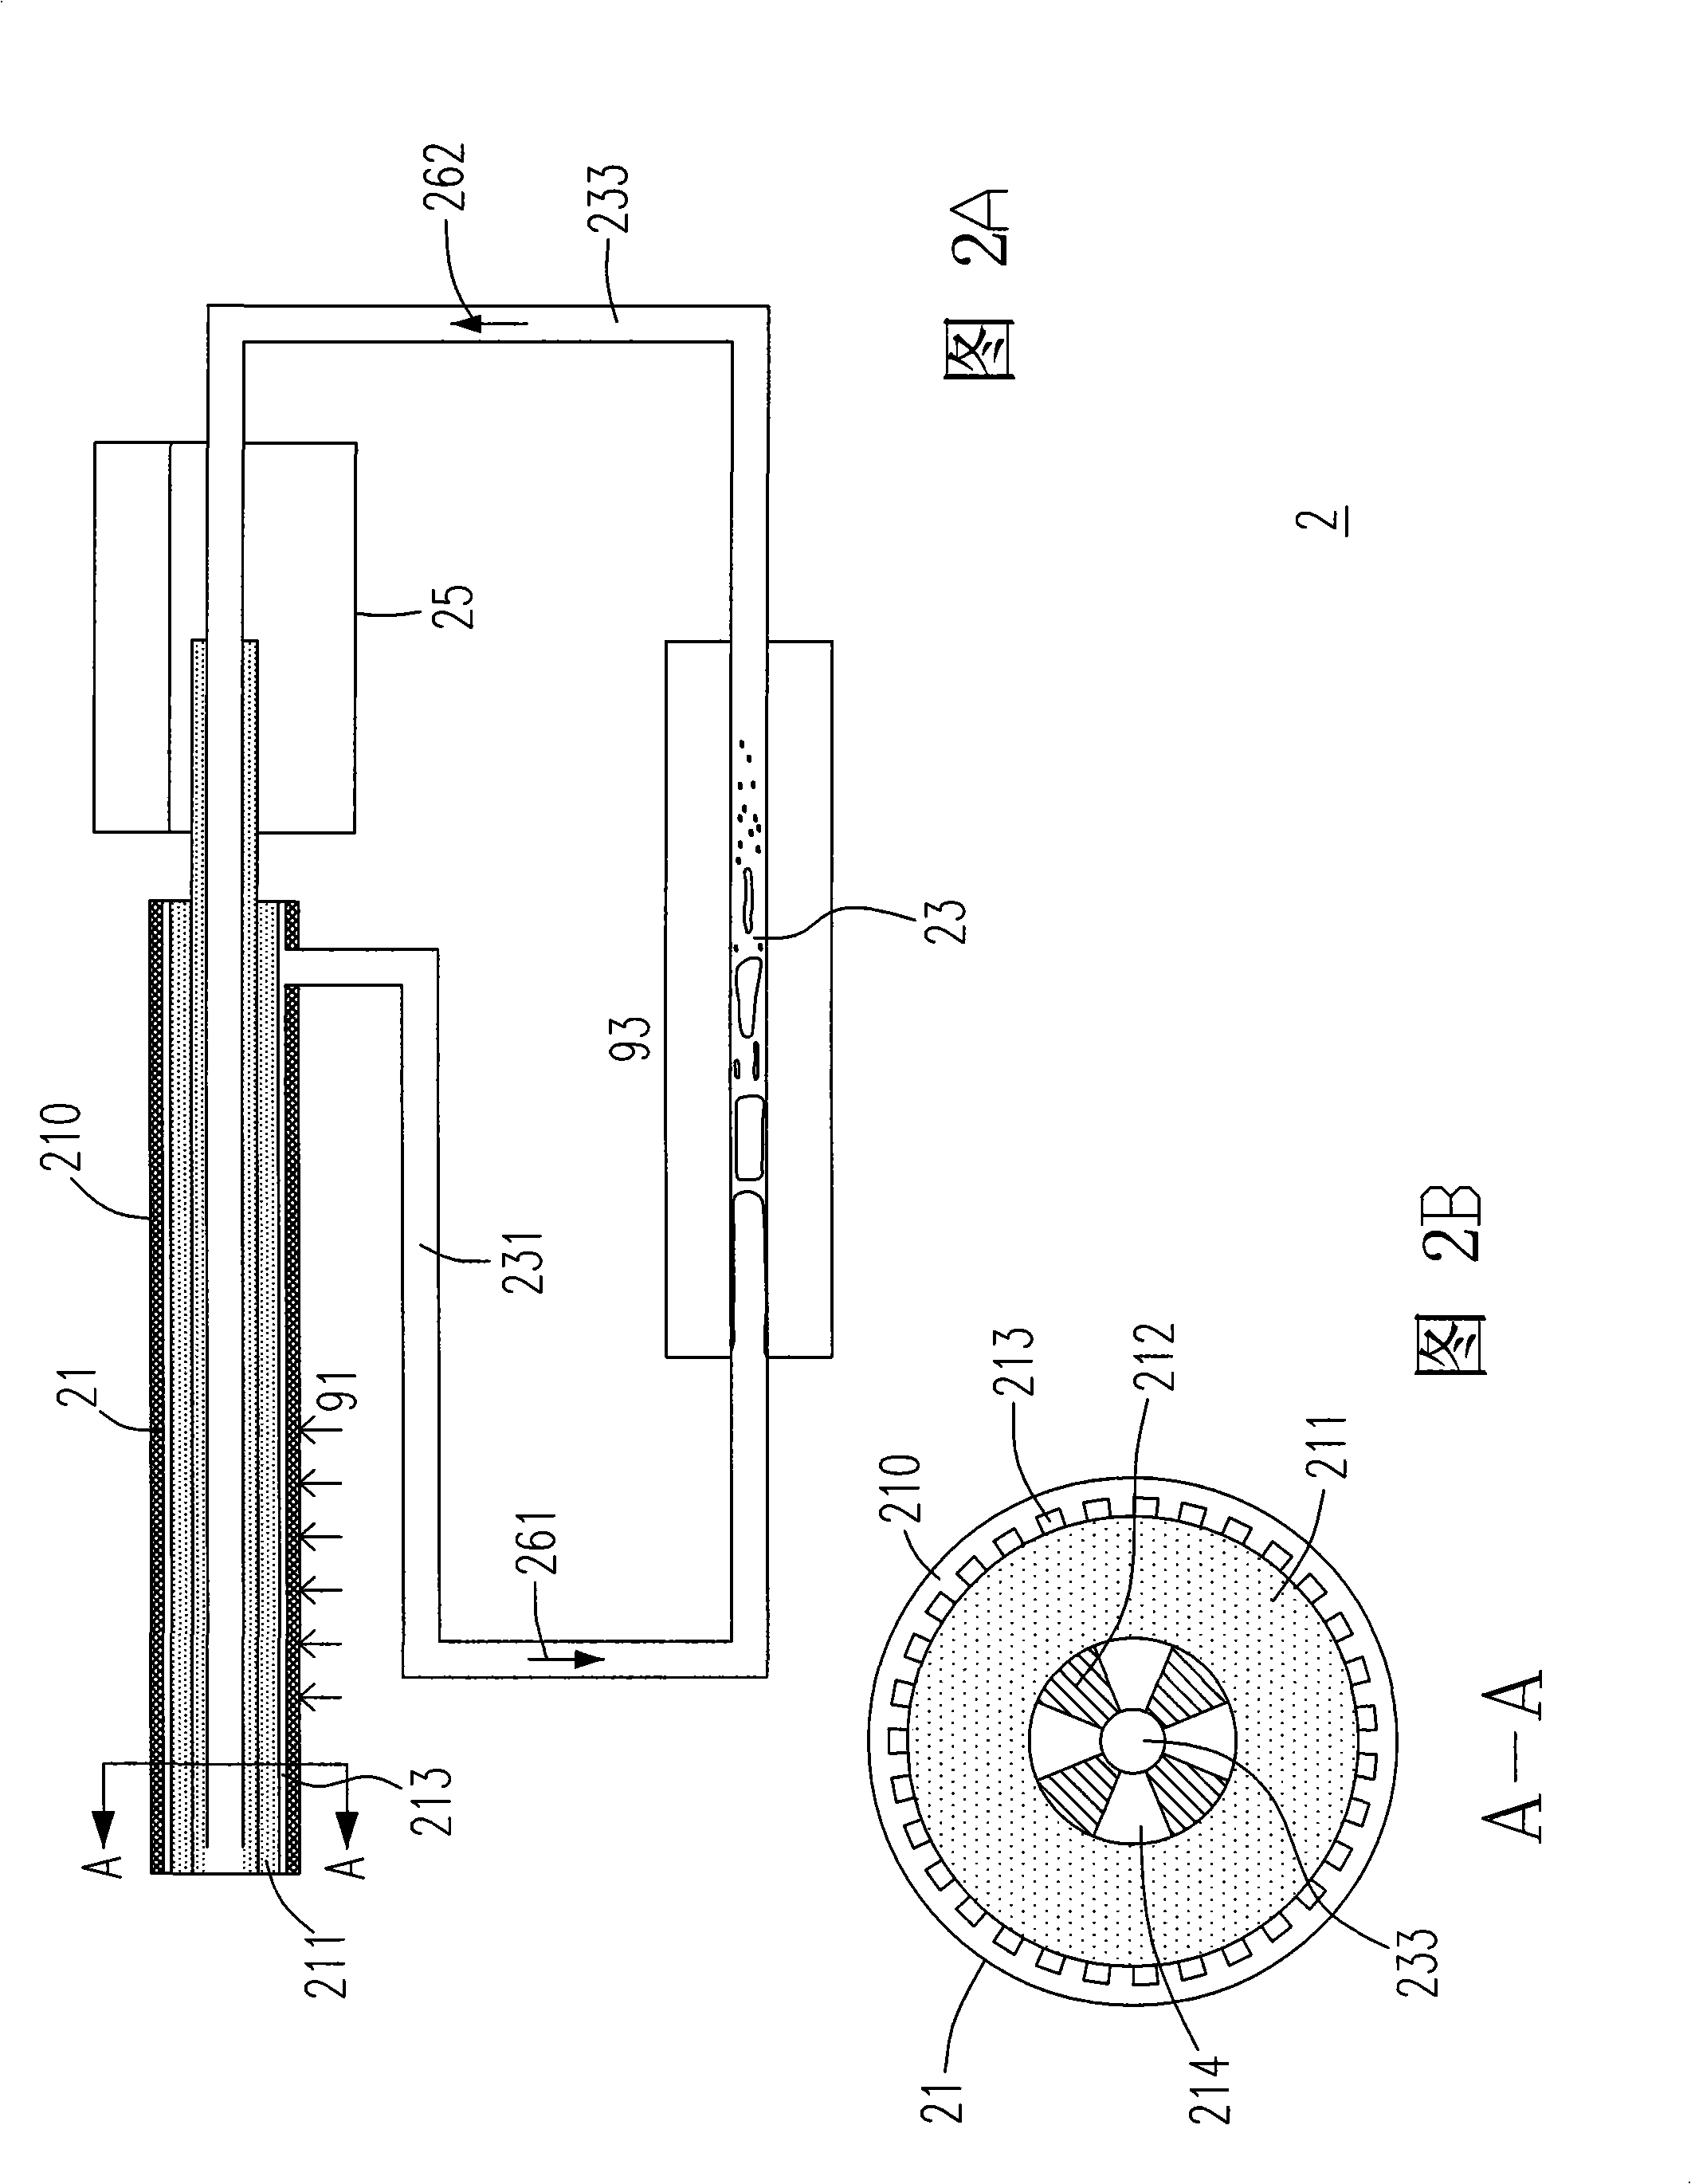 Flat type evaporator radiation system